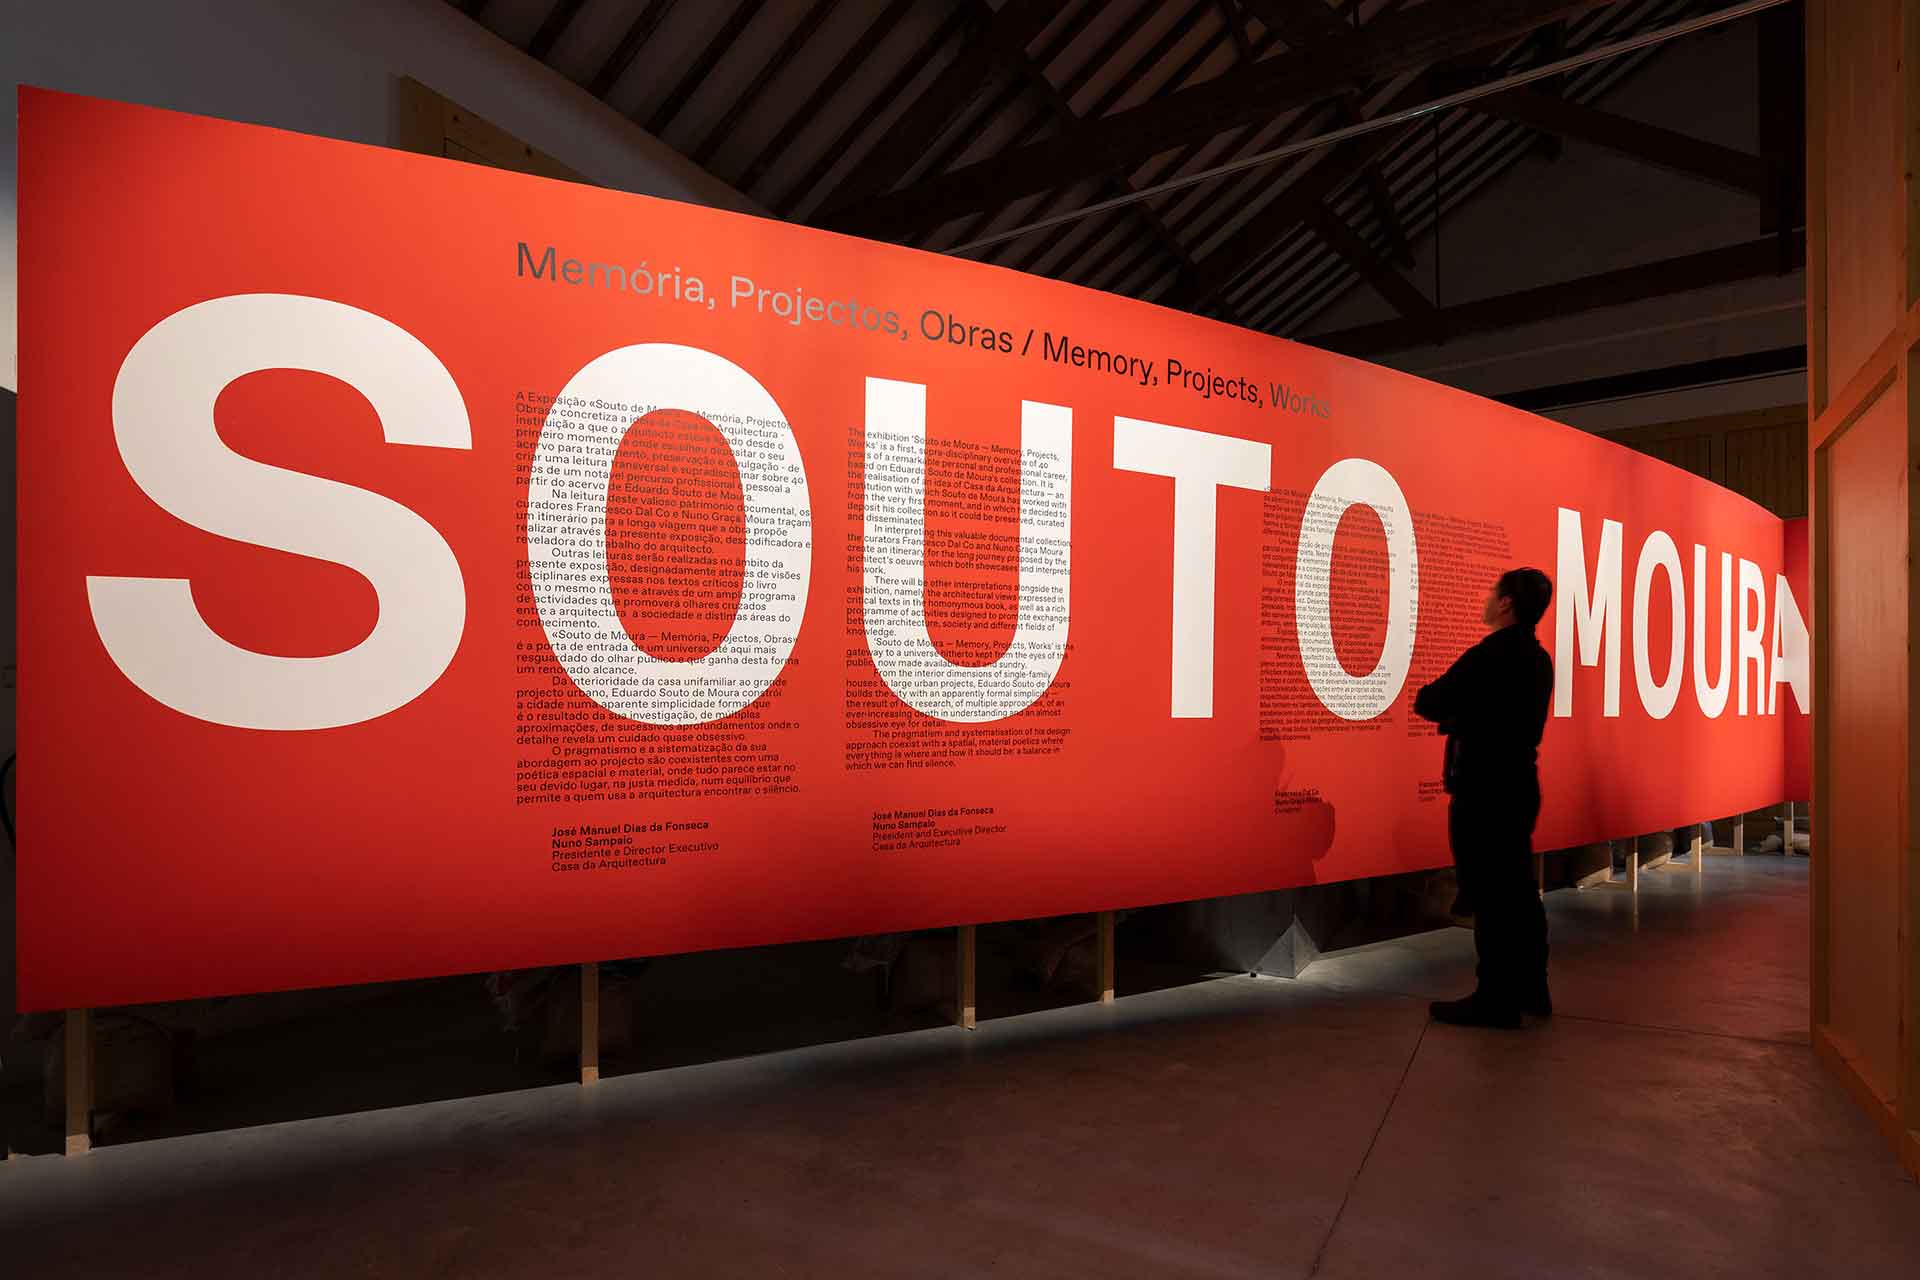 Exposition Temporaire “Souto Moura: Memória, Projectos, Obras”, 2021